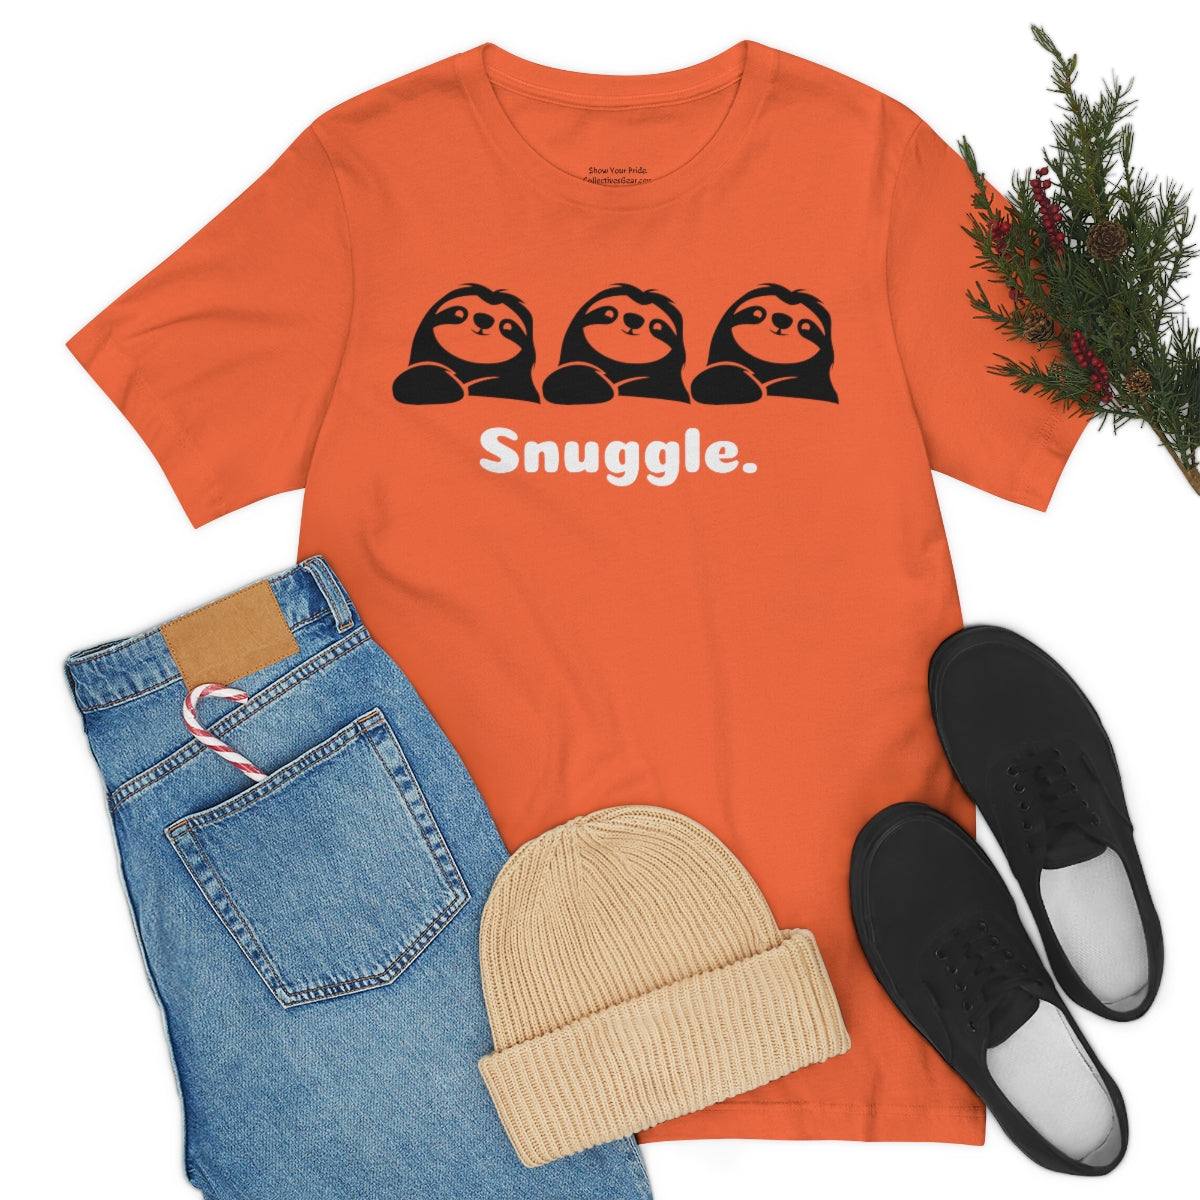 Snuggle of Sloth T-shirt